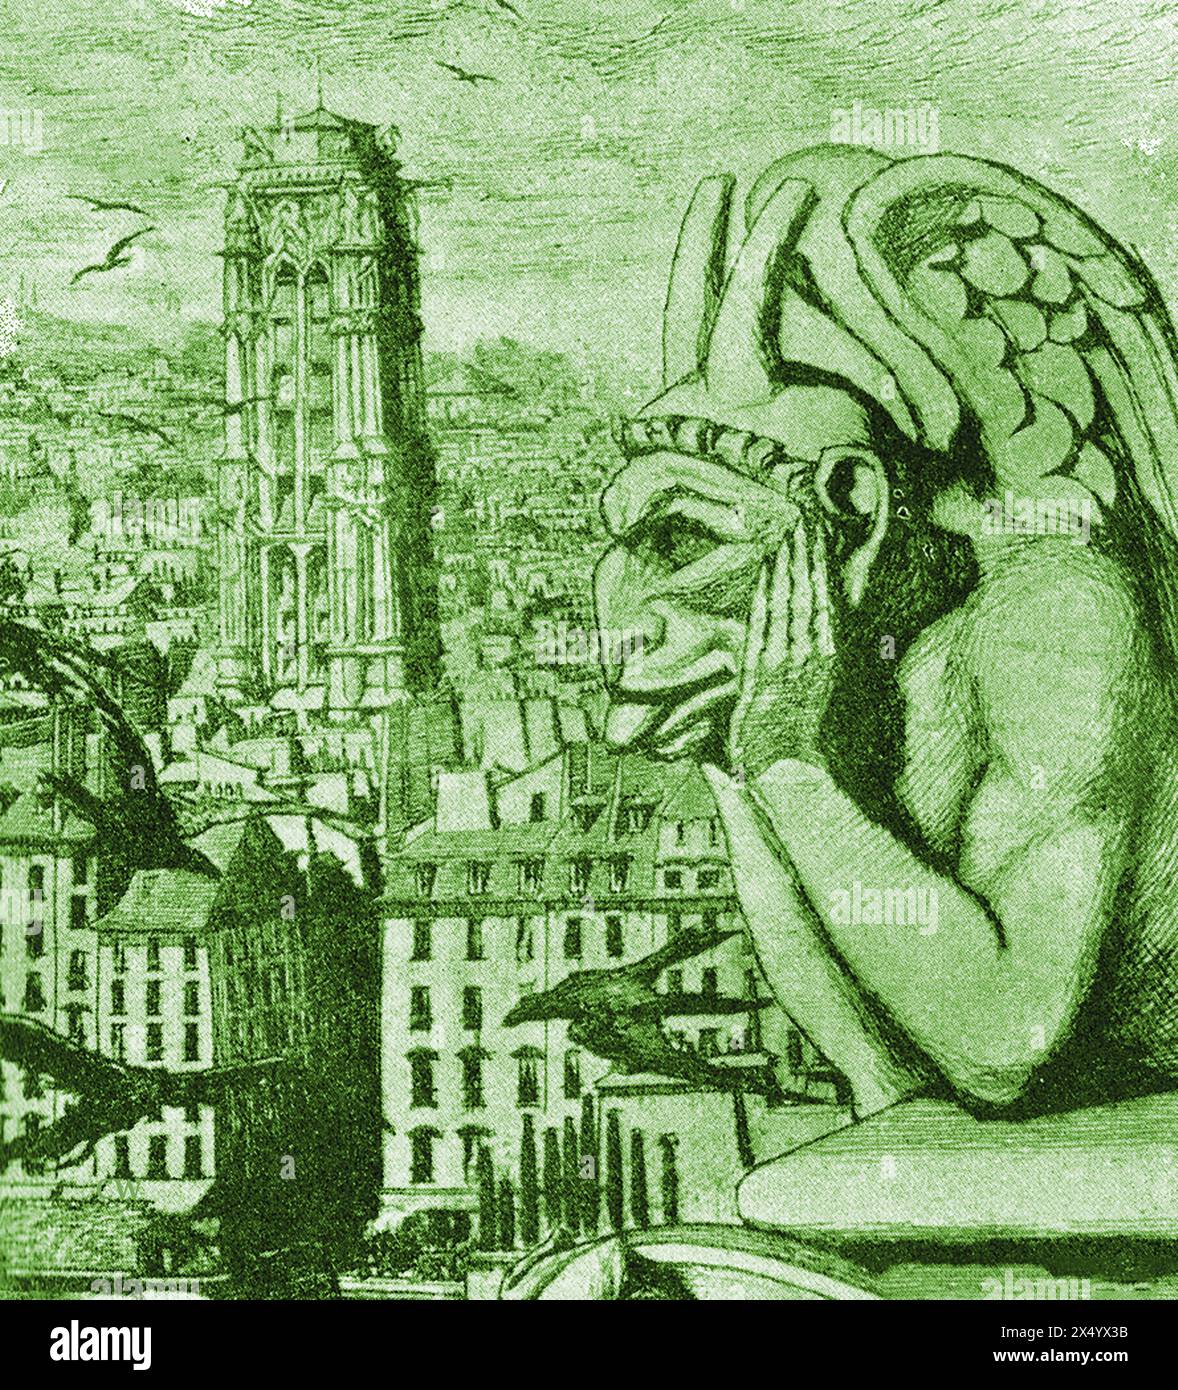 Ein alter Gravur, der Le Stryge, den Vampir, groteske Chimera-Figur (manchmal auch als Gargoyle, Teufel oder Dämon bezeichnet) in der Kathedrale Notre Dame in Paris, Frankreich zeigt. Geschaffen von Eugène Emmanuel Viollet-le-Duc, der für die Restaurierung der Kathedrale von 1843 bis 64 verantwortlich war. Der Hüter der Kathedrale wurde mit einem langweiligen Ausdruck geschnitzt. - Gravure ancienne représentant Le Stryge, le Vampire, Figur chimérique grotesque (parfois appelée gargouille, diable ou démon) sur la cathédrale Notre-Dame, Paris, Frankreich. Créée en 1843-64 par Eugène Emmanuel Viollet-le-Duc. Le cathédrale gardien Stockfoto